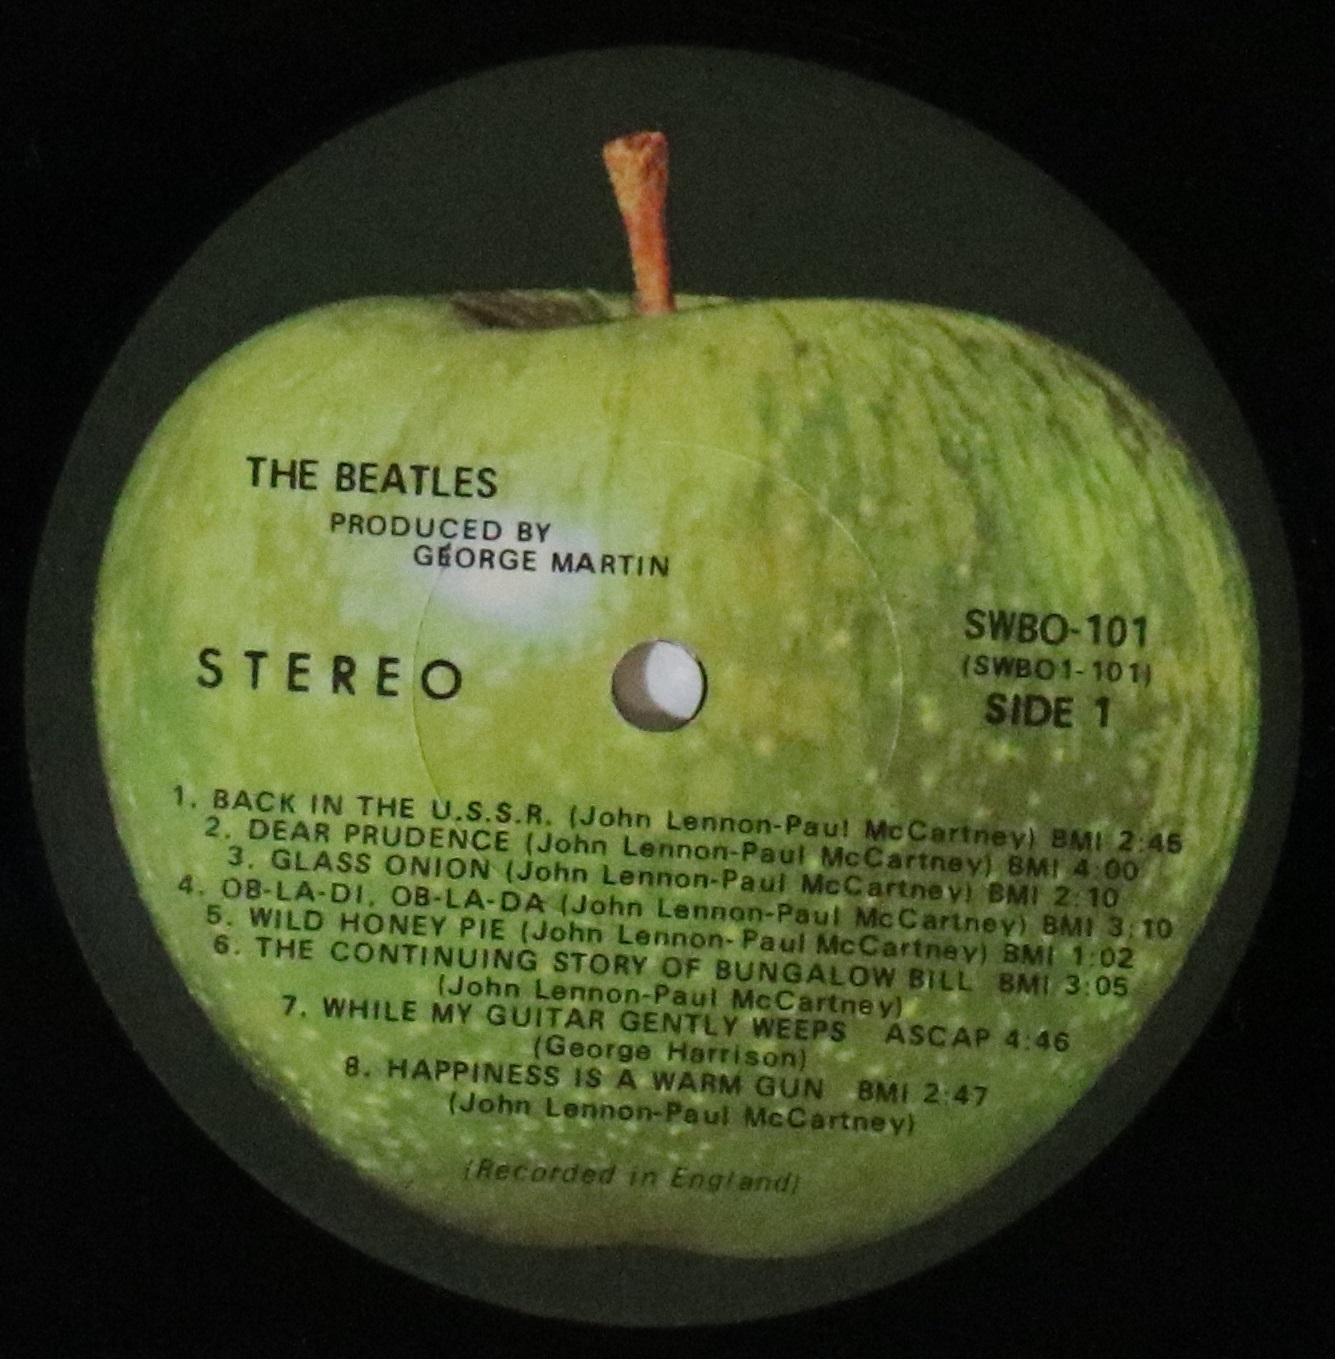 THE BEATLES - THE BEATLES (WHITE ALBUM) - US '2ND' PRESSING LP (APPLE SWBO-101). - Image 3 of 9